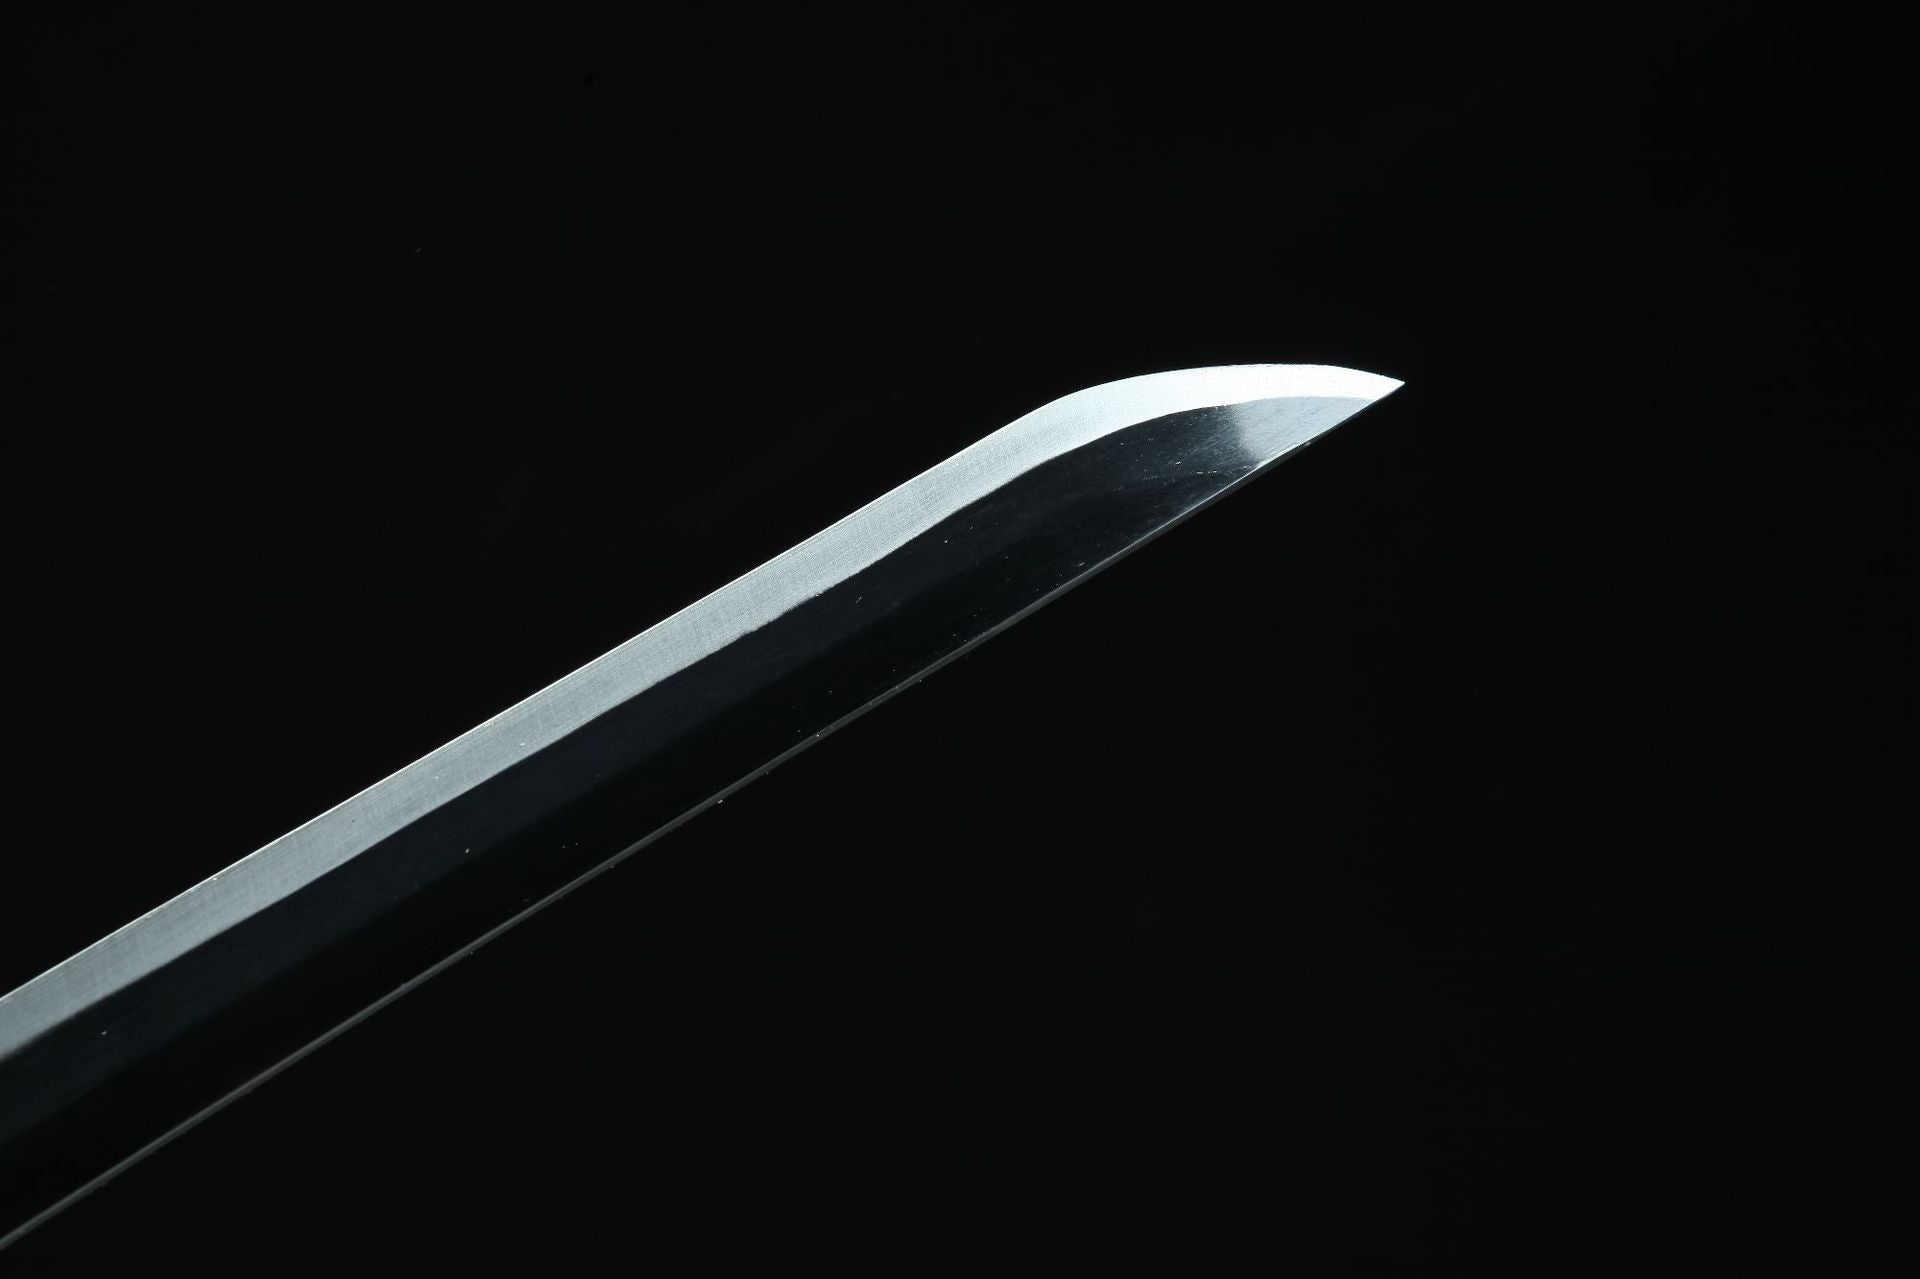 A close-up of Muichiro Sword's blade against a black background